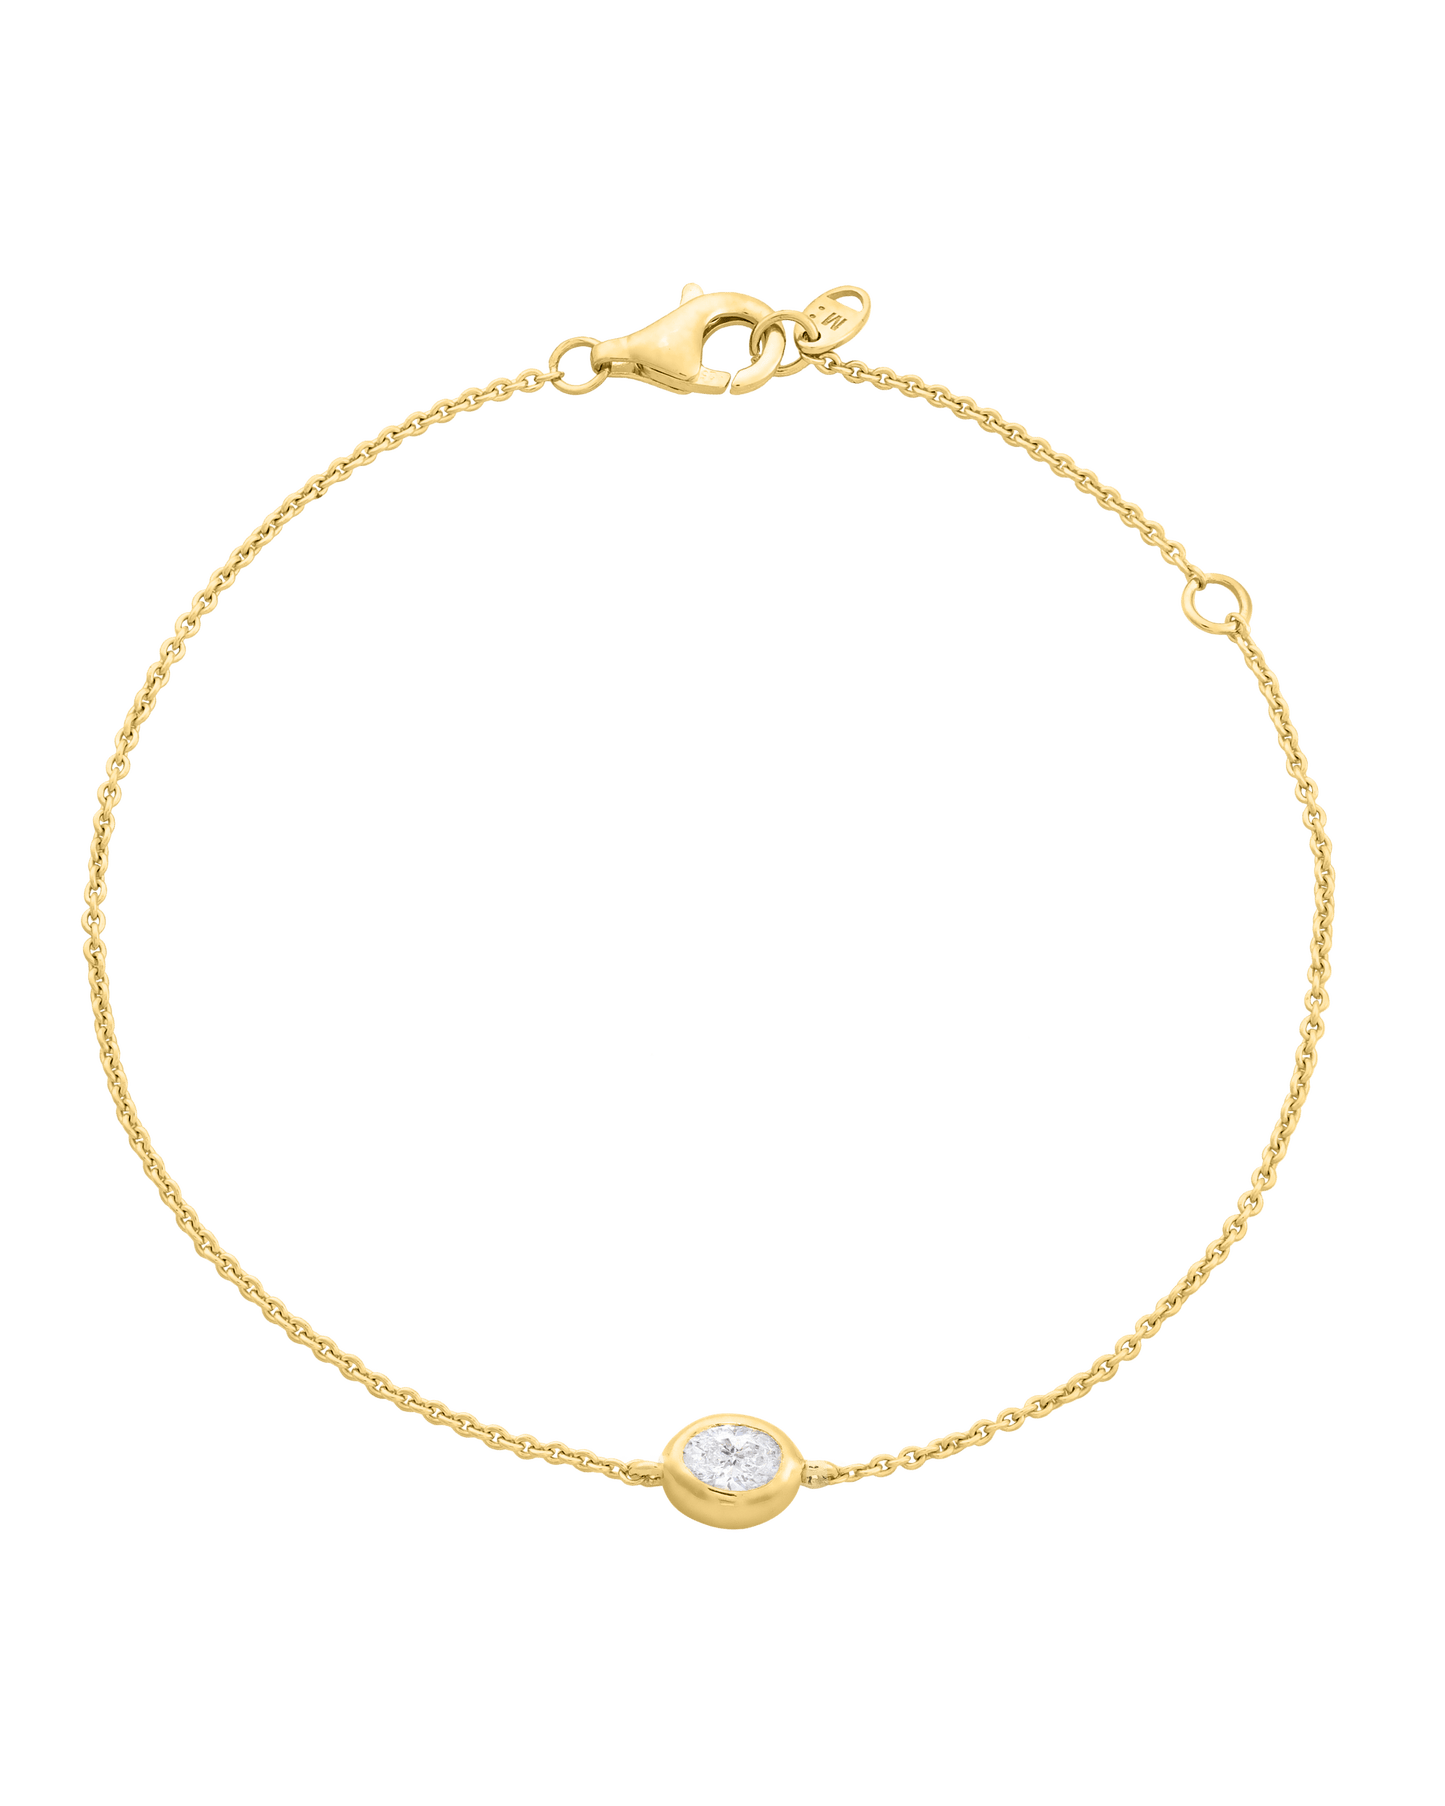 Oval Solitaire Diamond Bracelet - 18K Gold Vermeil Bracelets magal-dev 0.10 CT 6"+1“ extender 